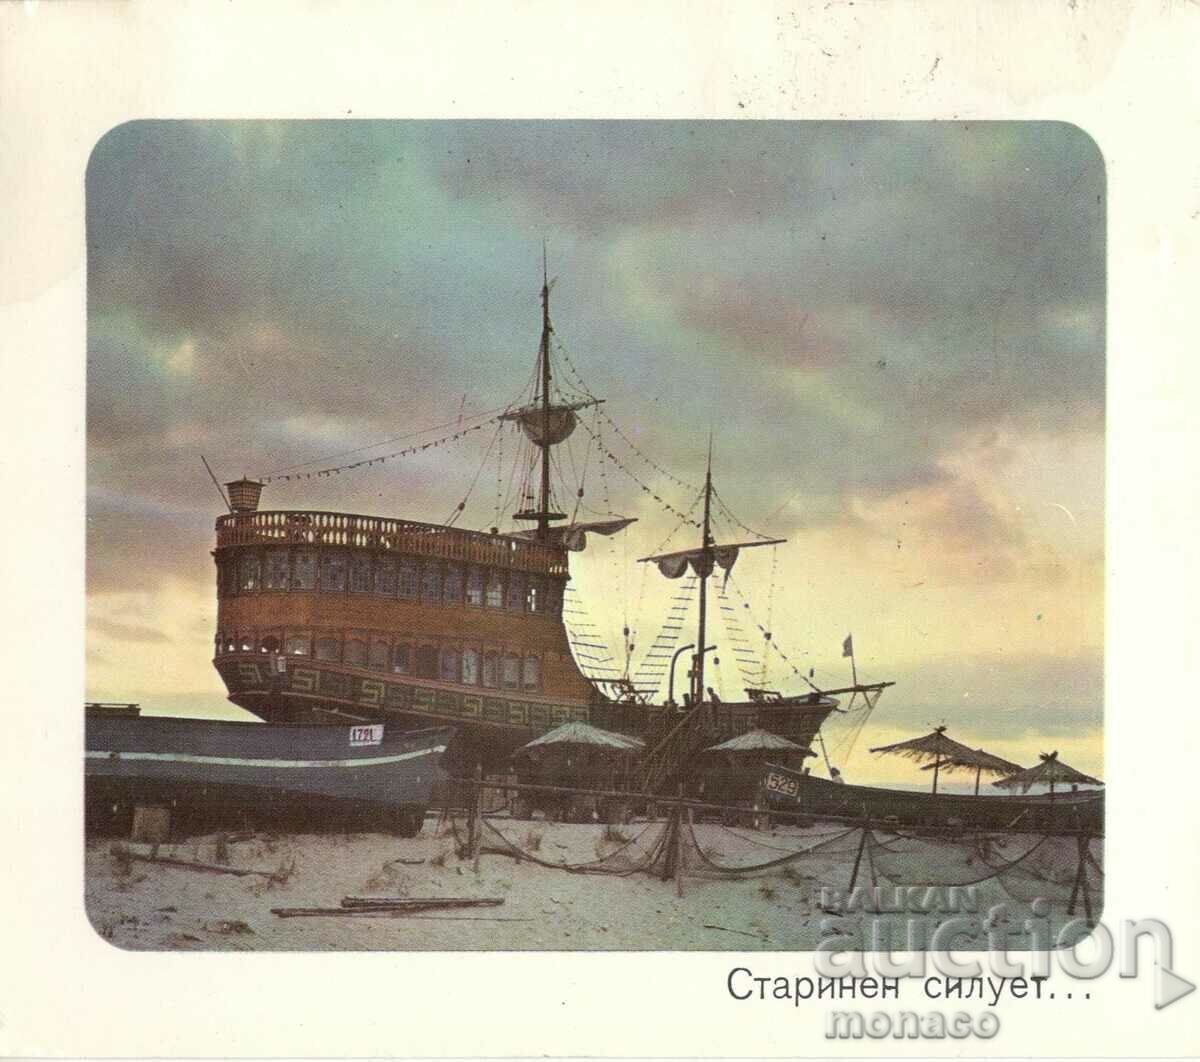 Old card - Black Sea, Ancient ship